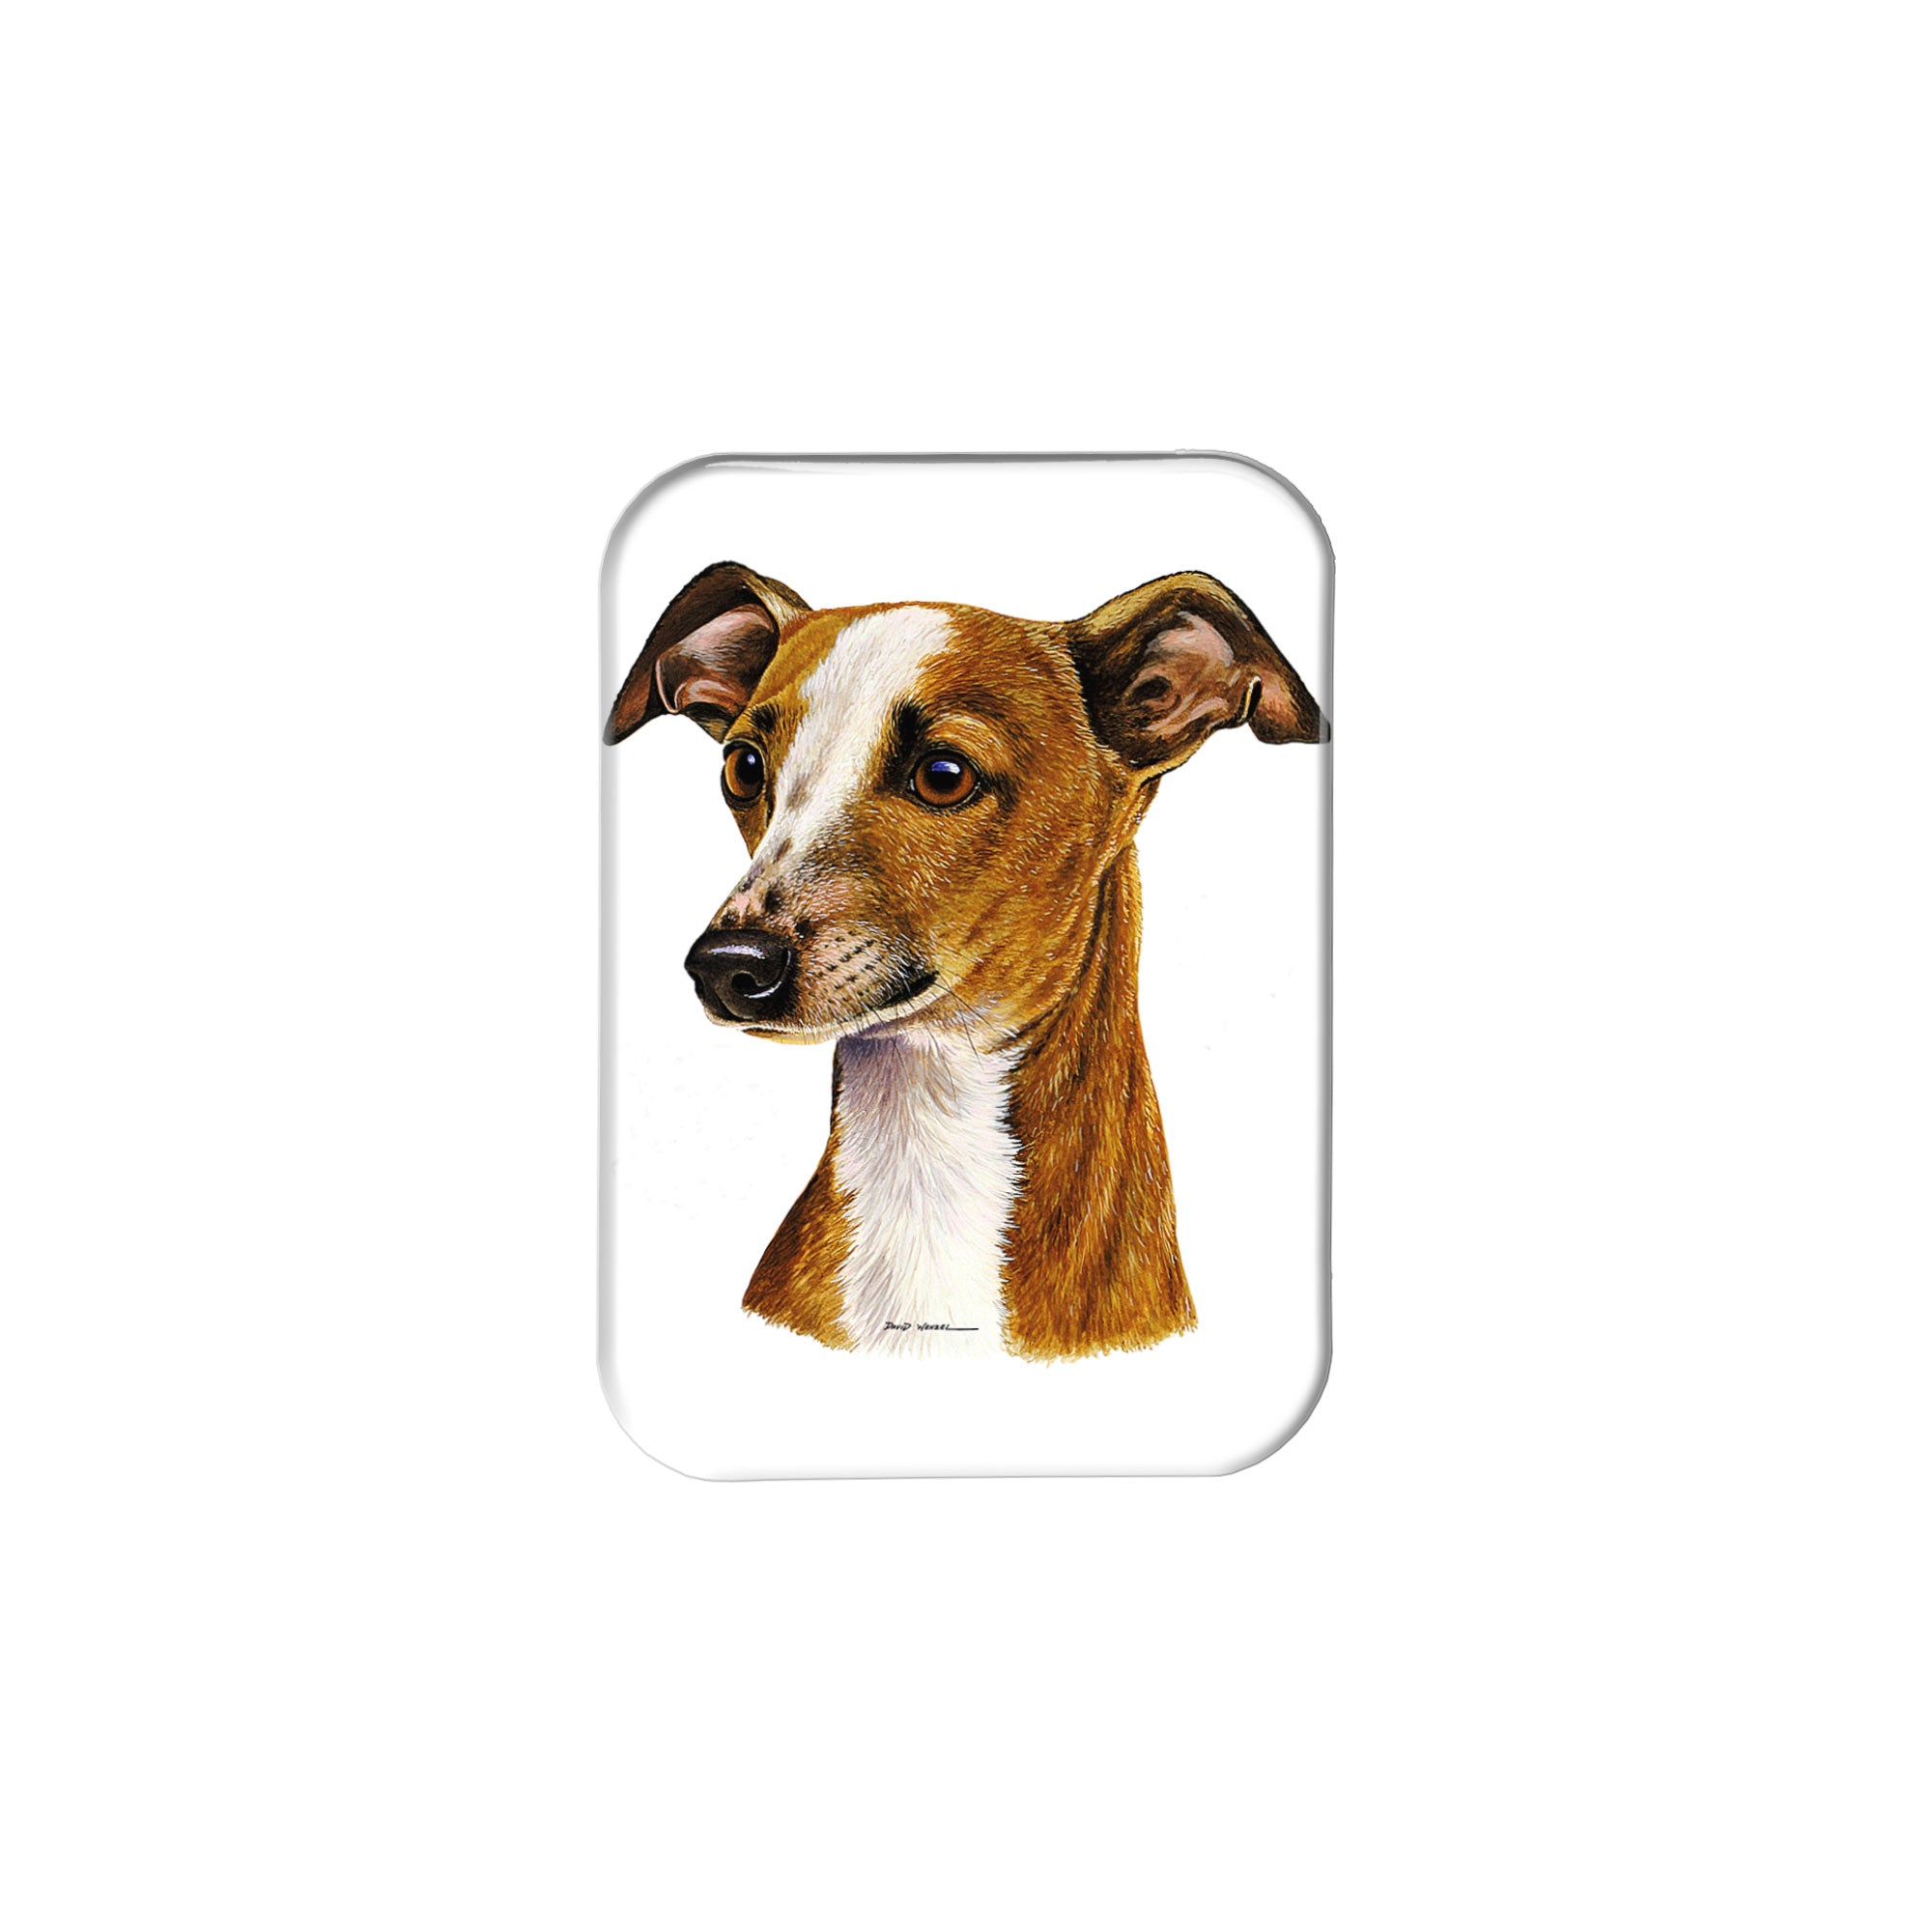 "Italian Greyhound" - 2.5" X 3.5" Rectangle Fridge Magnets